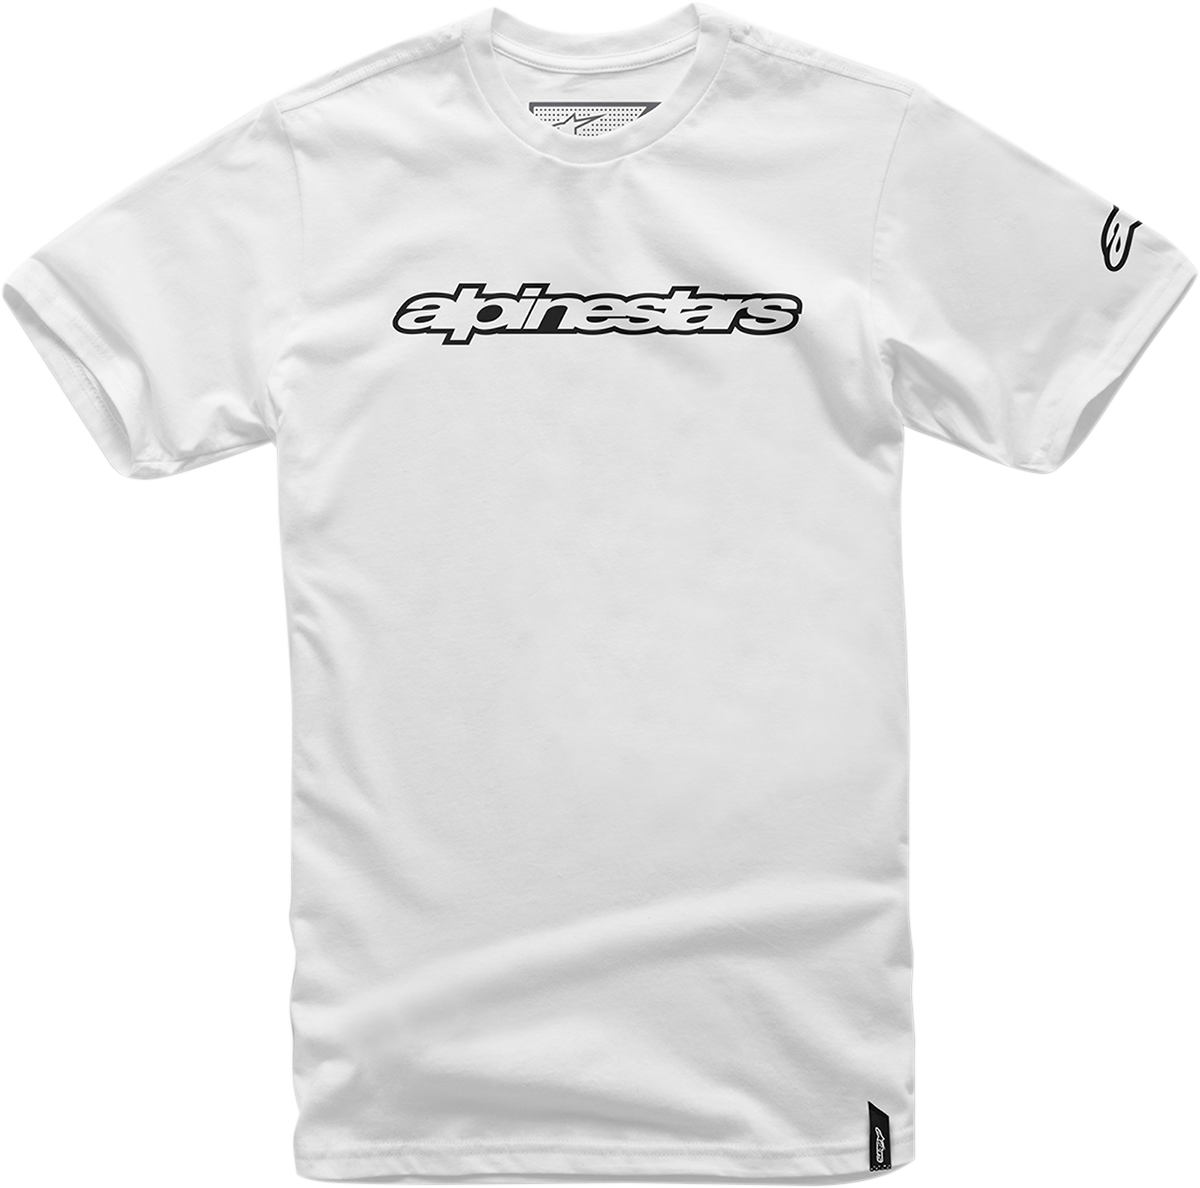 Word T-Shirt - White/Black - Medium